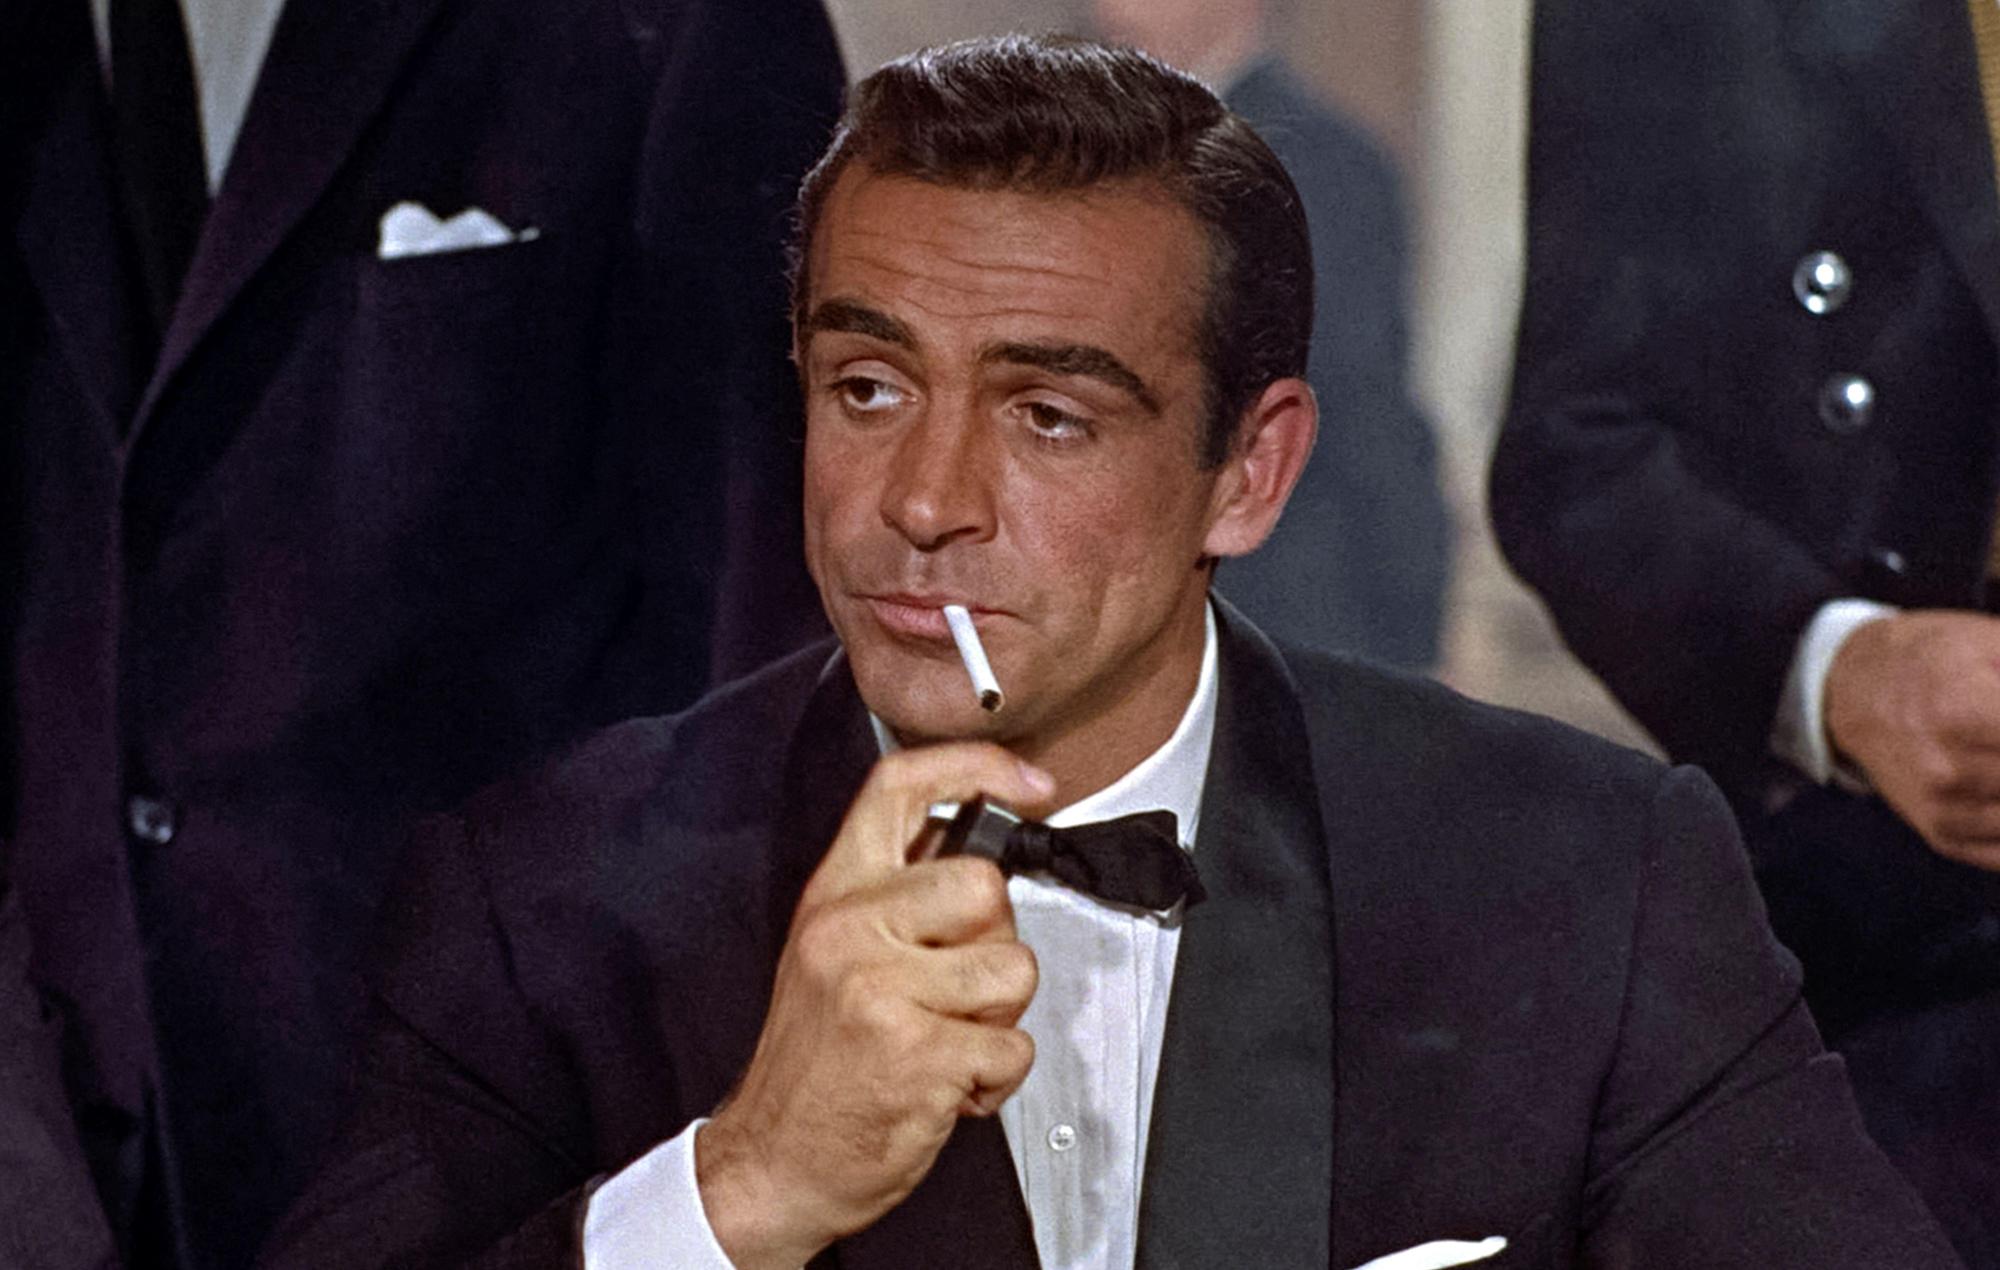 Sean Connery 1962 film "Dr. No"